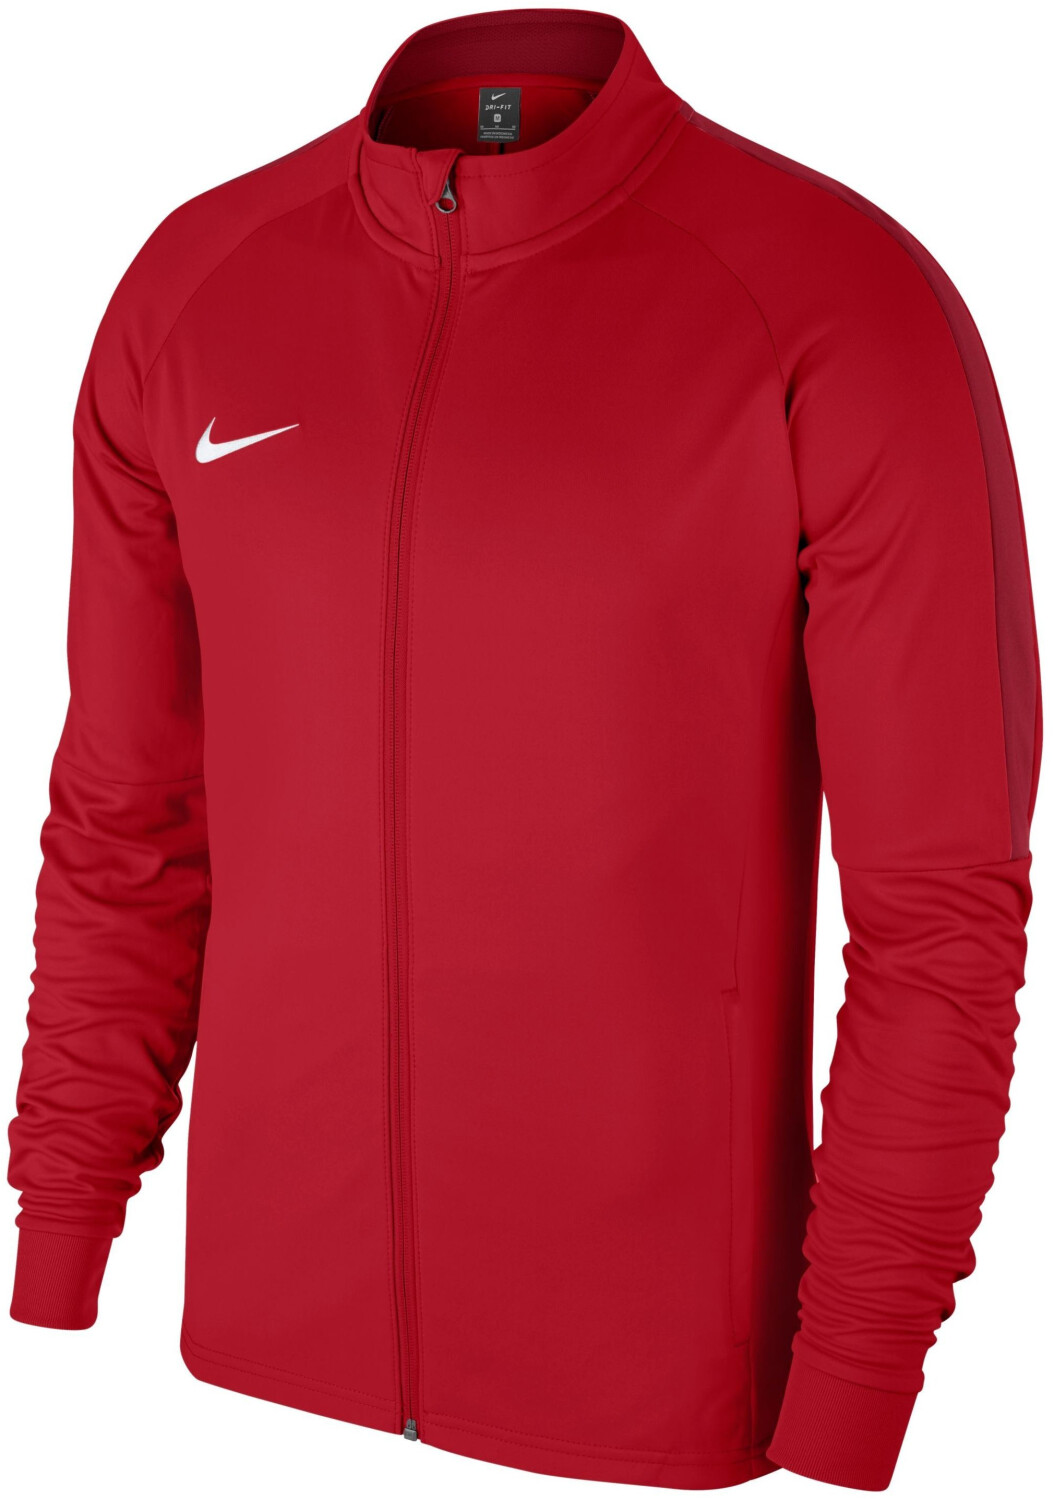 Nike Dry Academy 18 Training Jacket university red/gym red/white